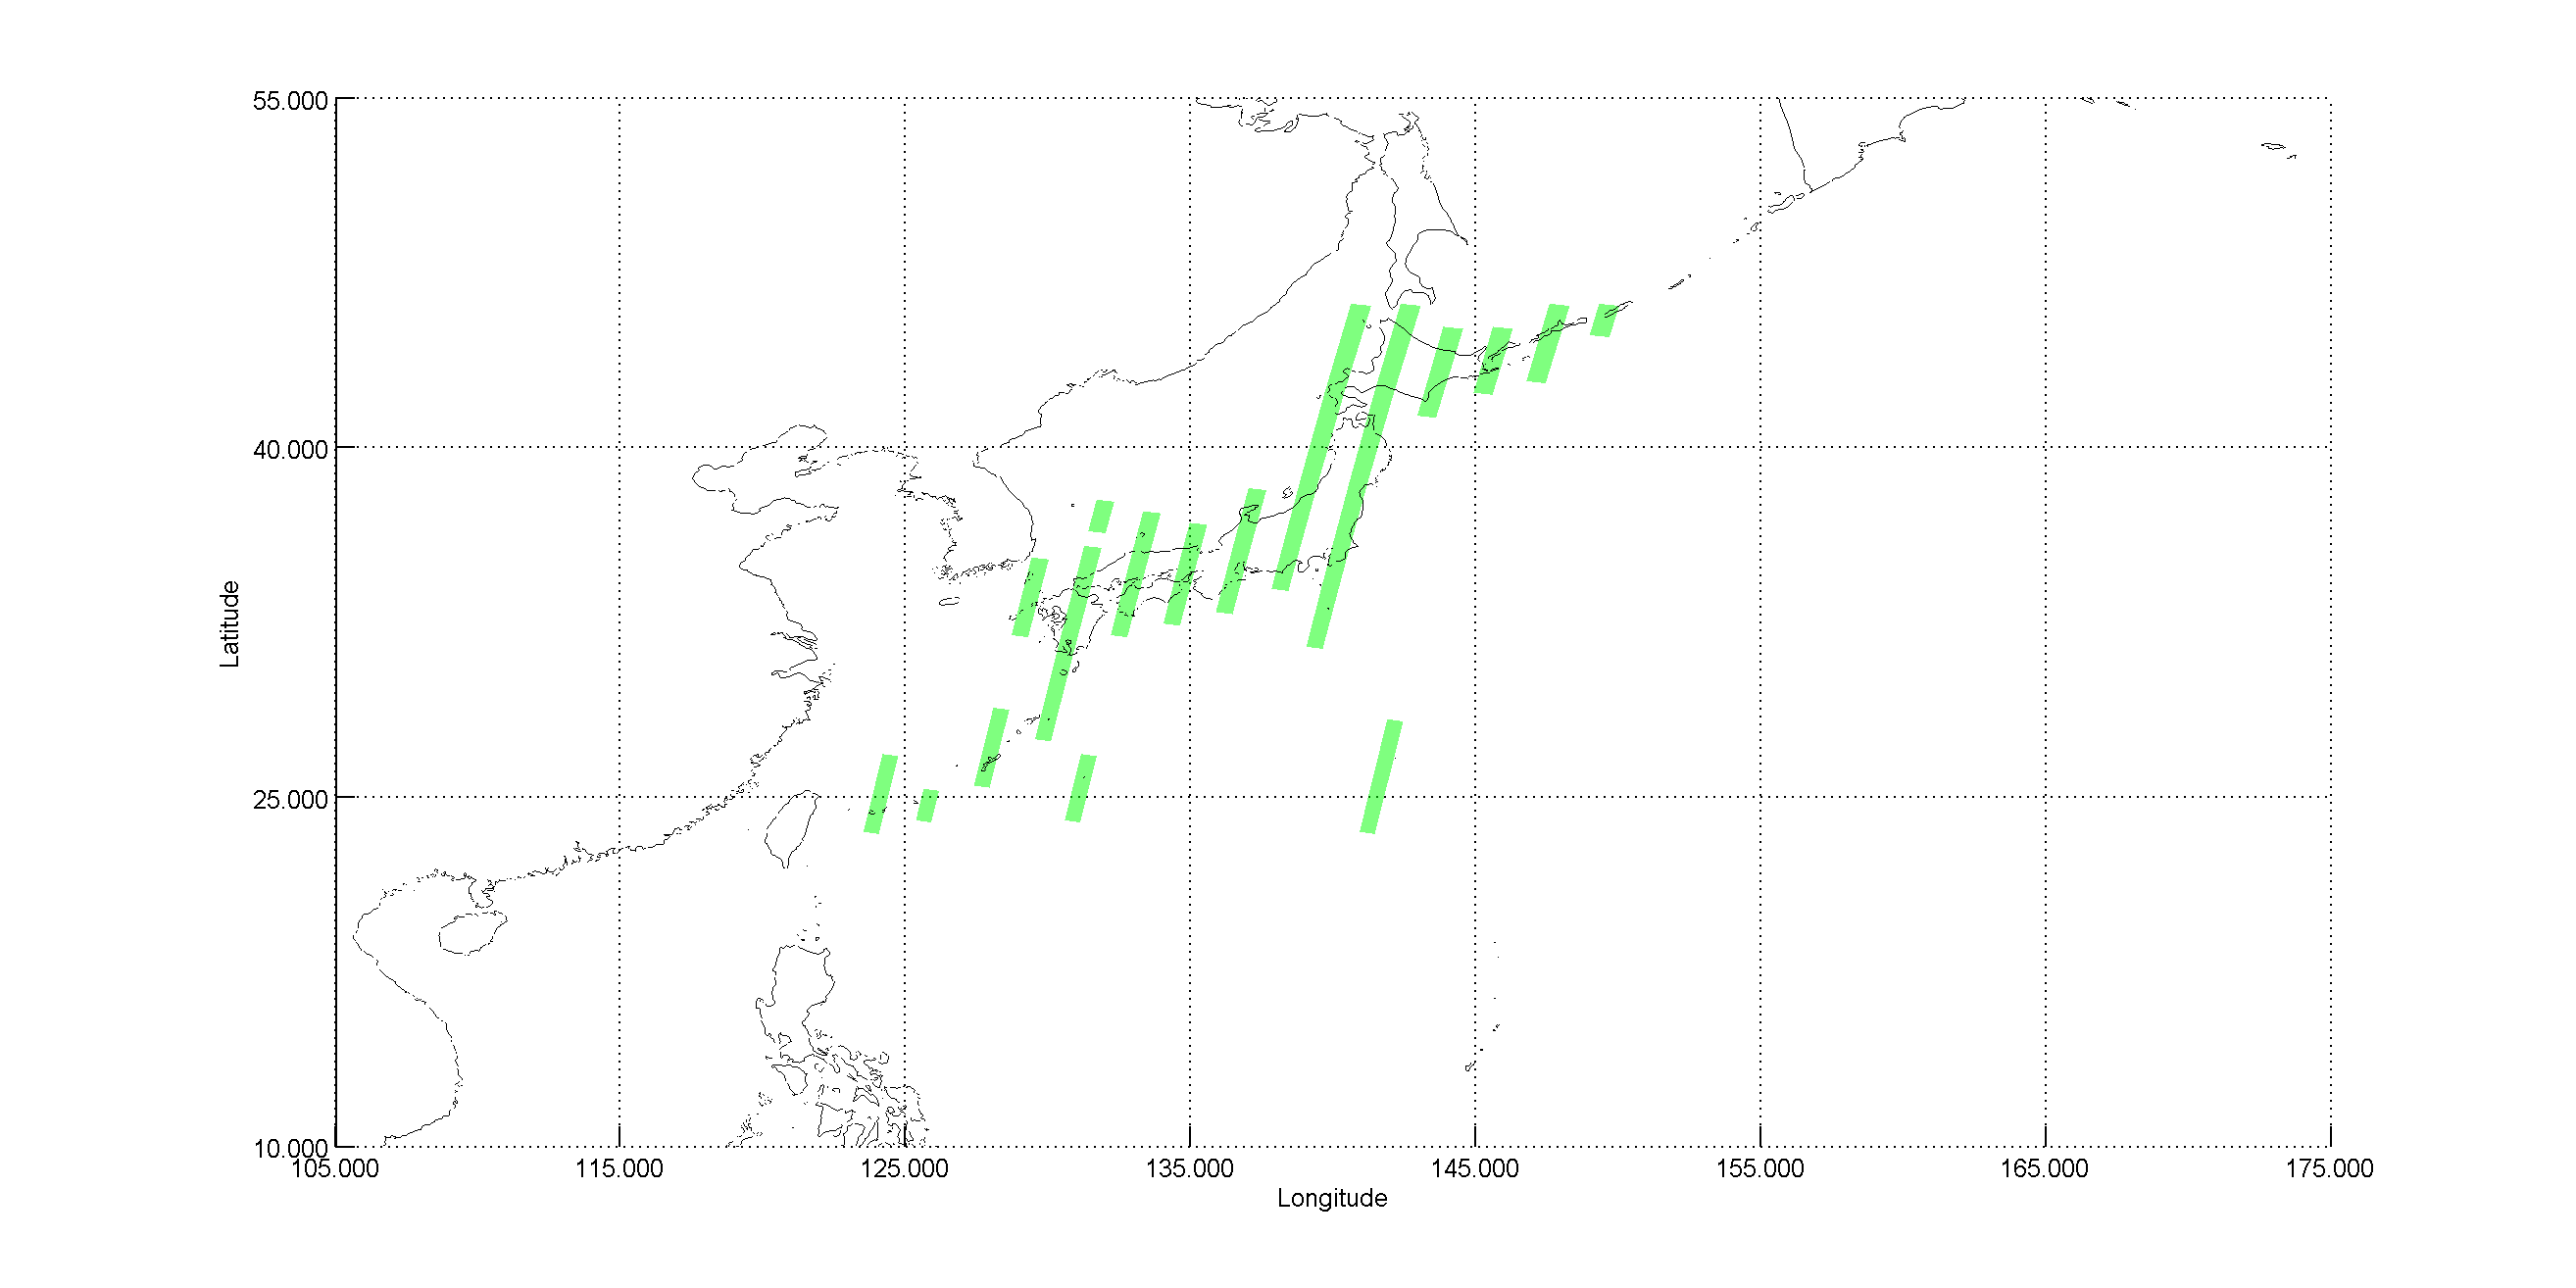 CYCLE_154 - Japan Descending passes